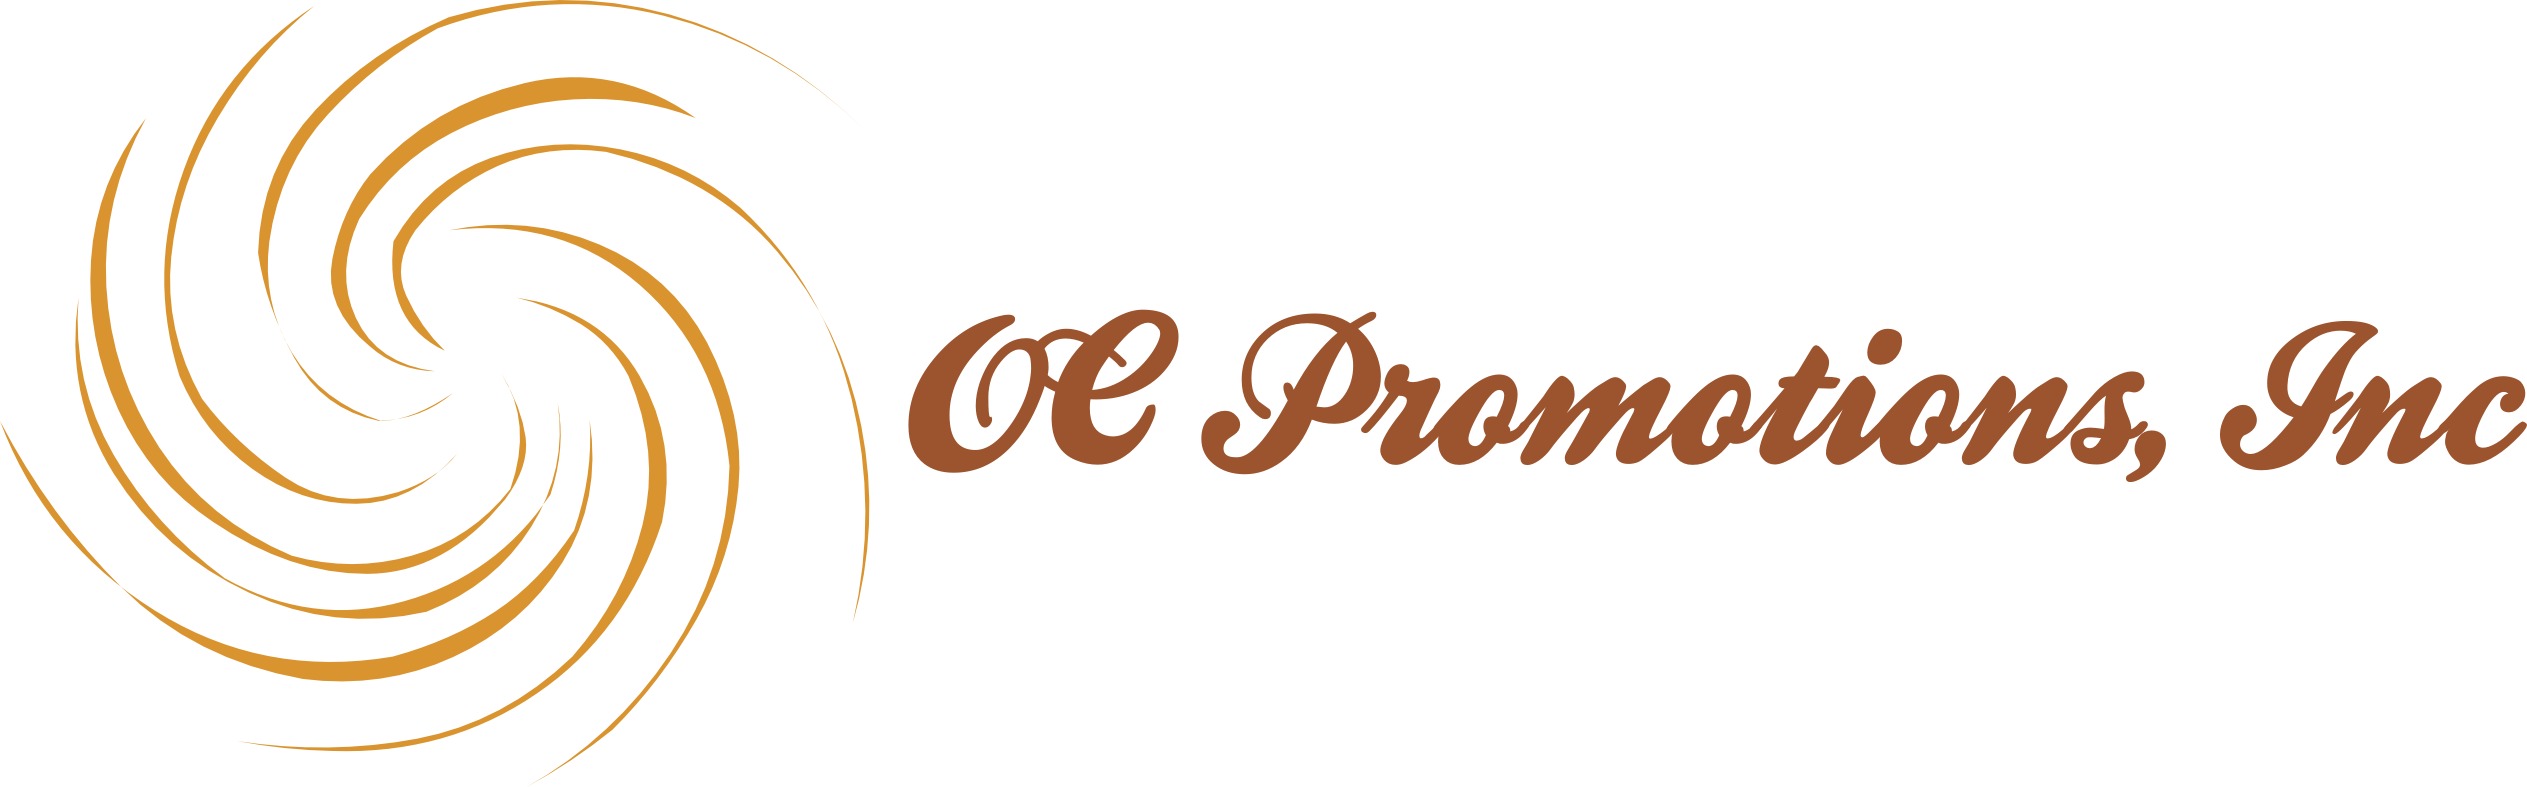 OC Promotions, Inc logo